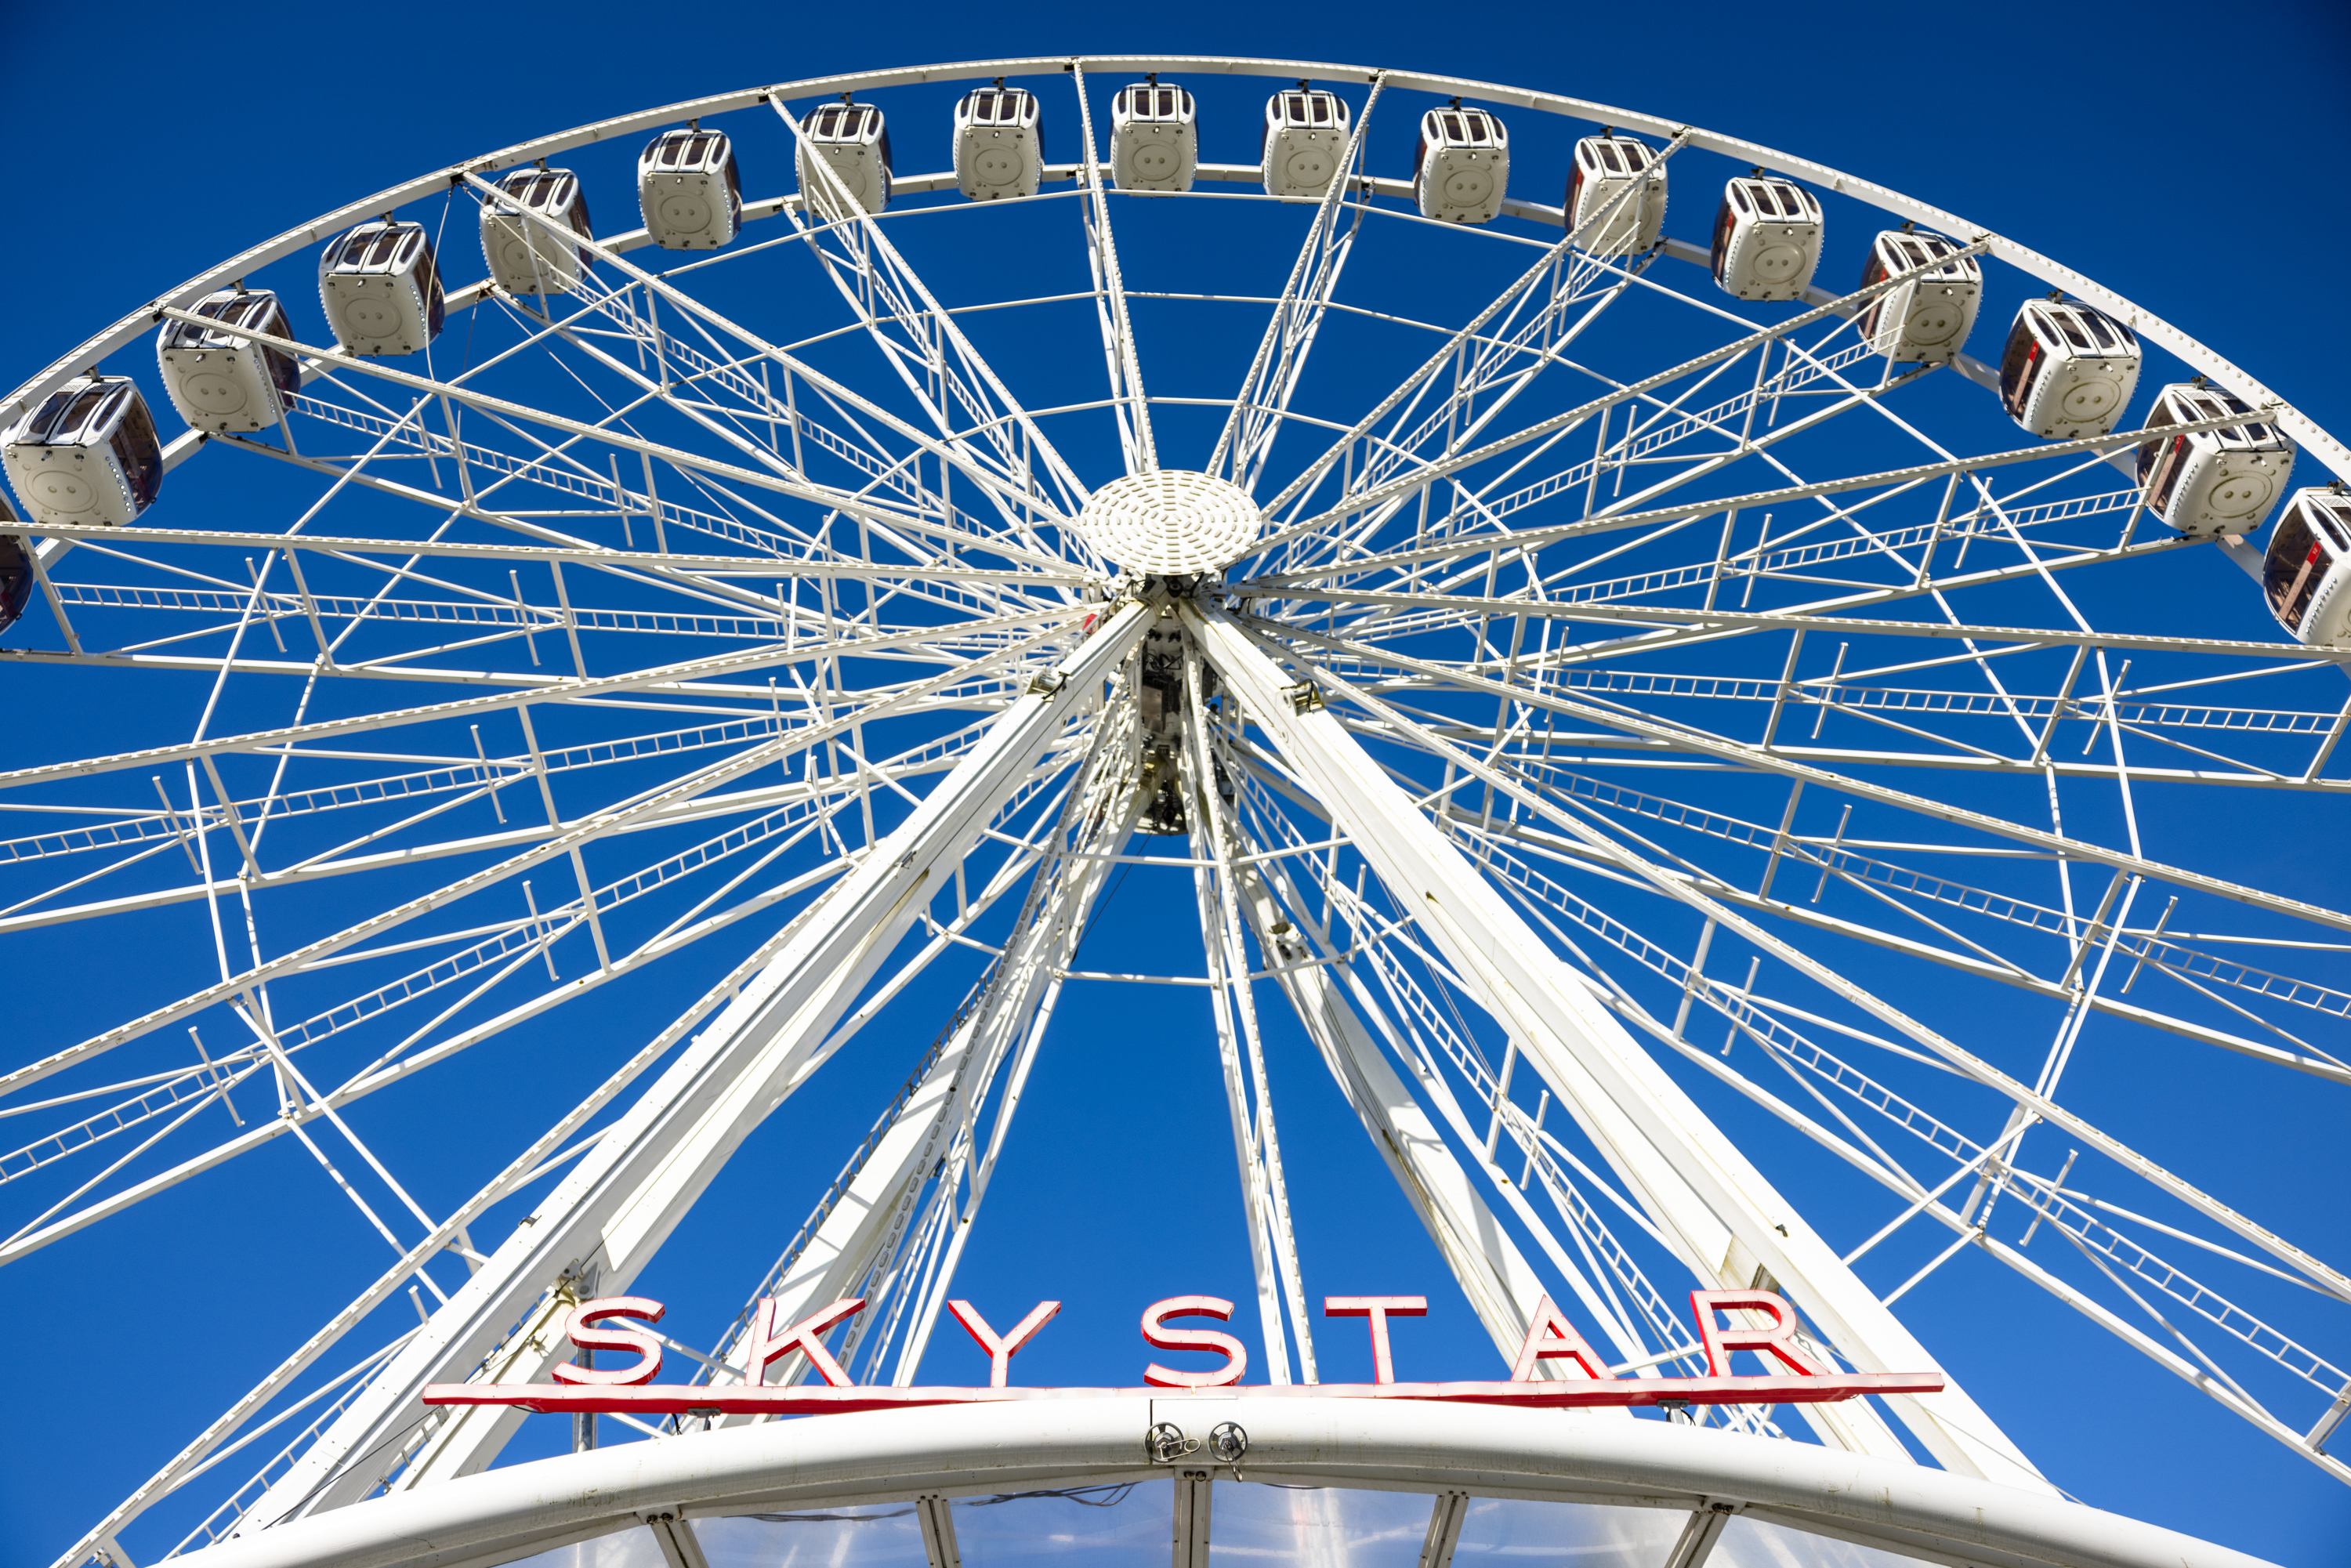 SF floats keeping SkyStar Ferris wheel in Fisherman's Wharf, The City